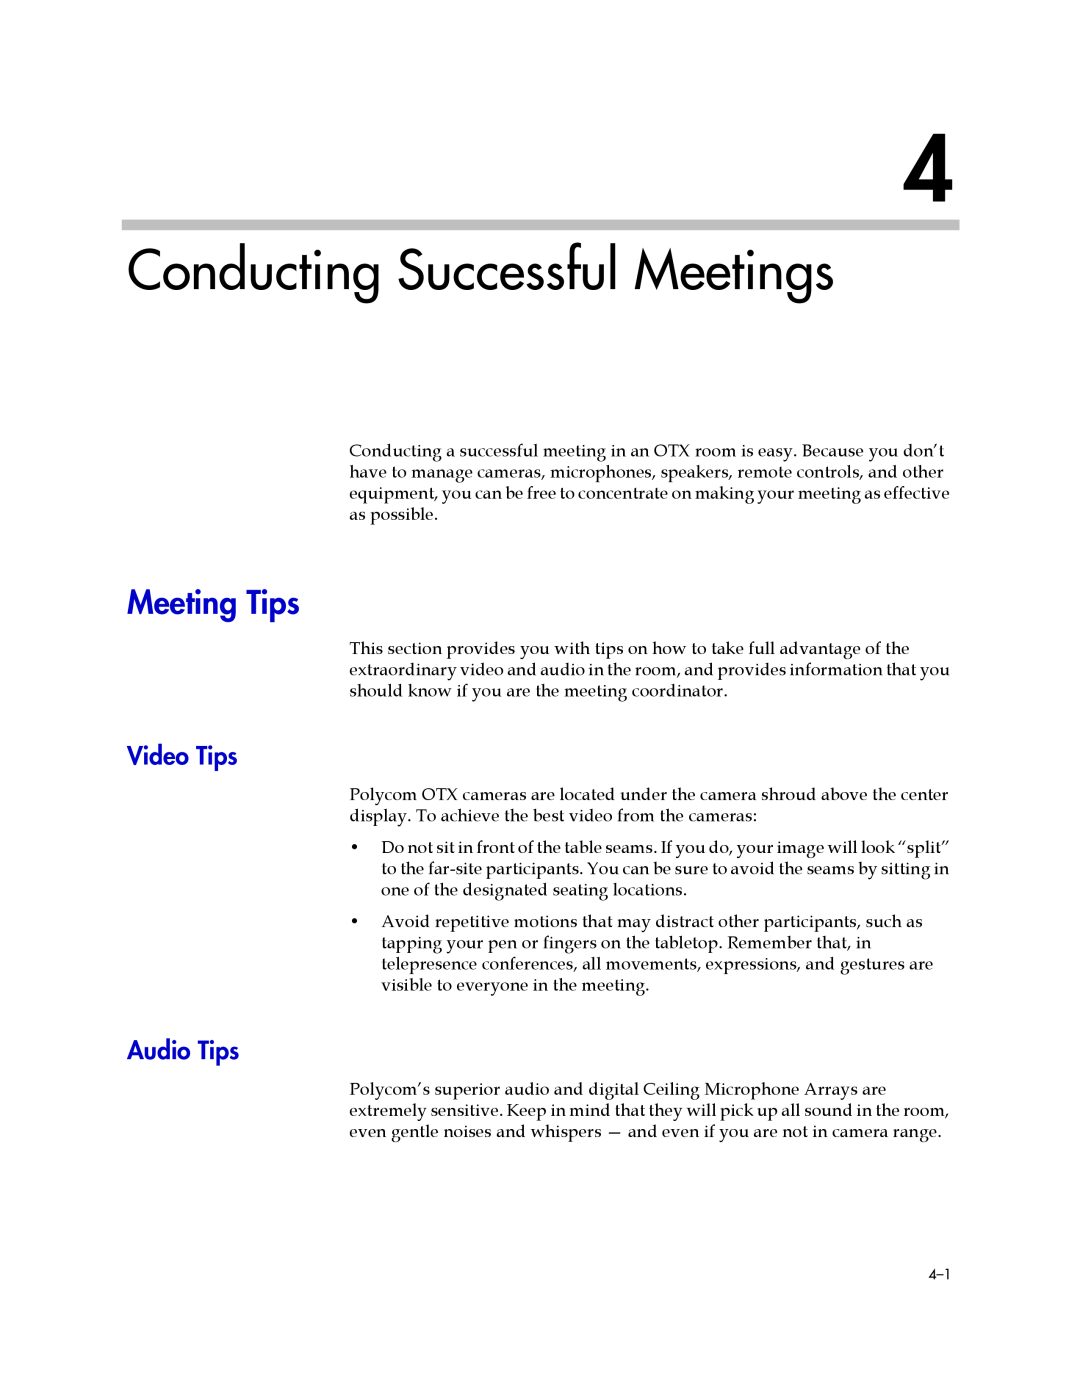 Polycom 300 manual Conducting Successful Meetings, Meeting Tips 